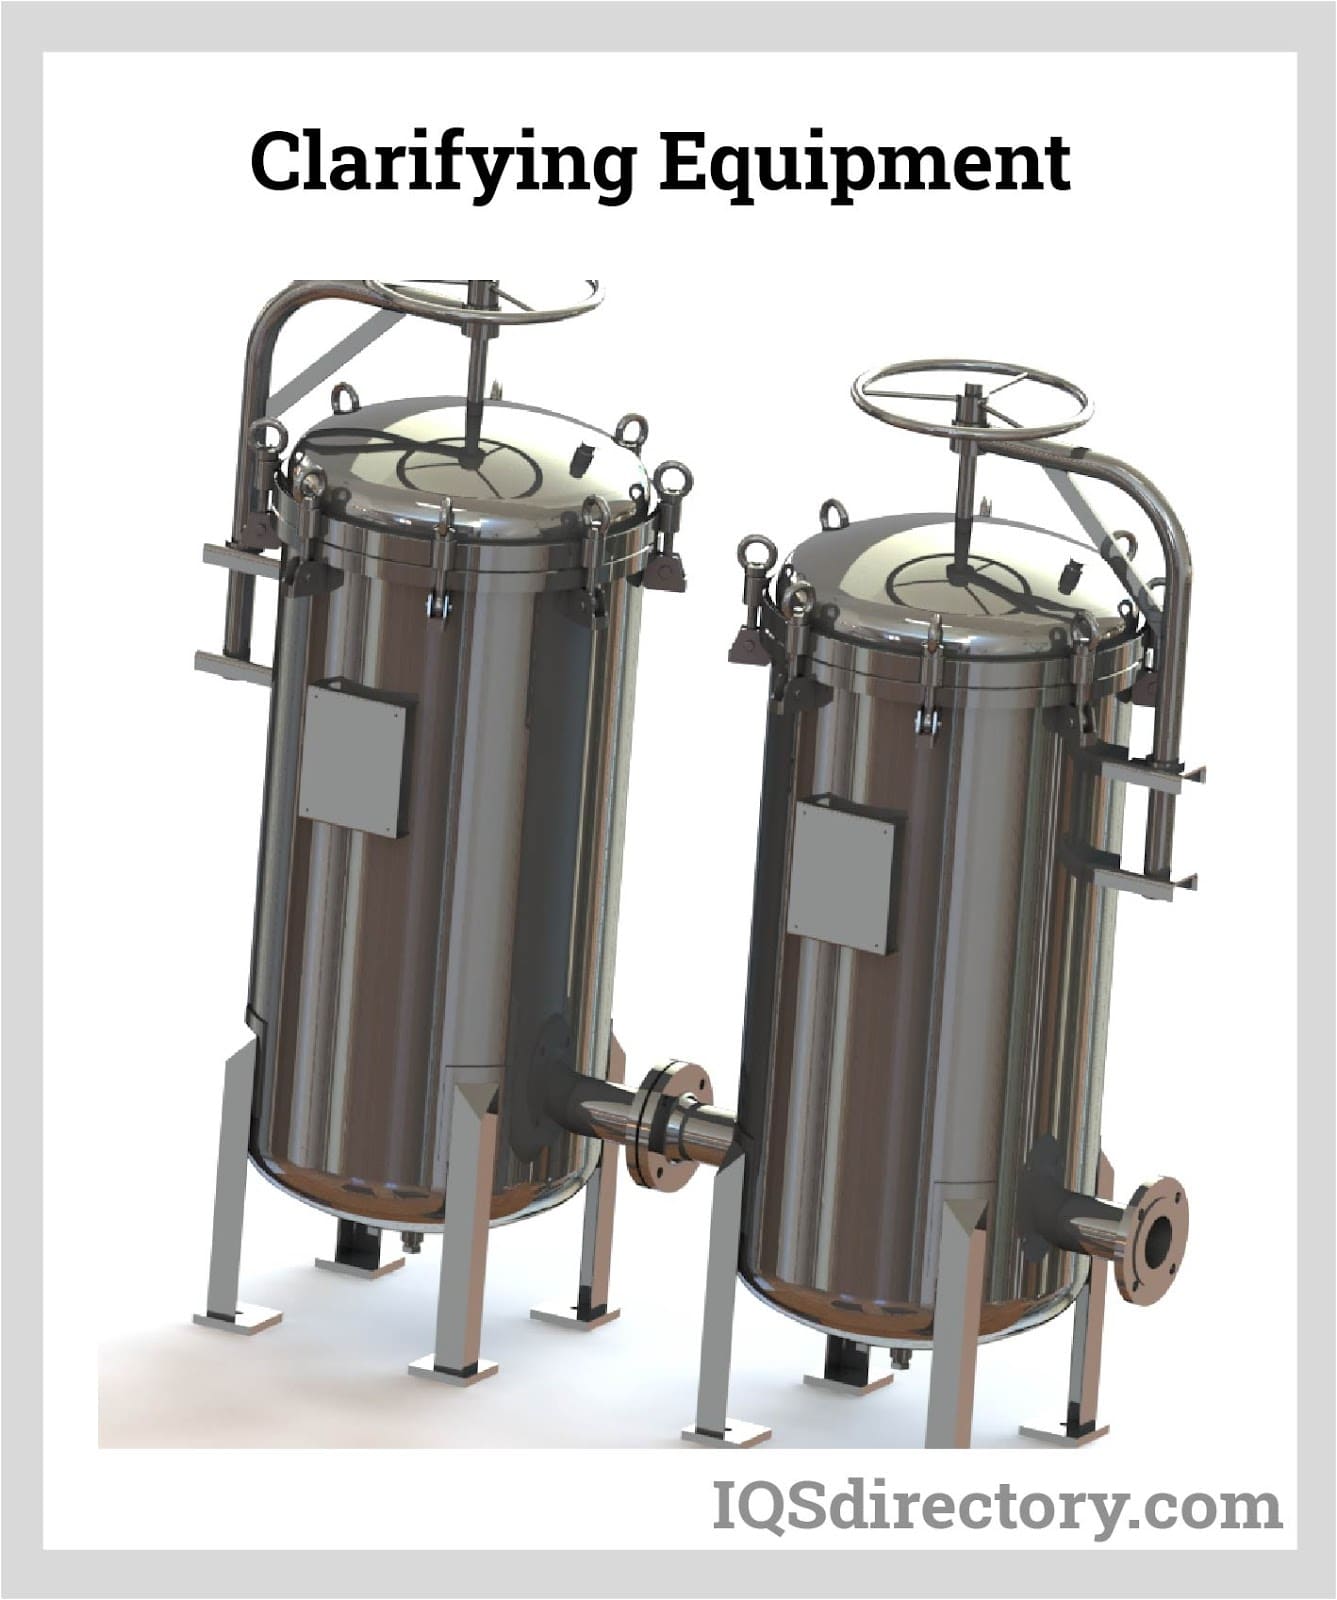 Clarifying Equipment